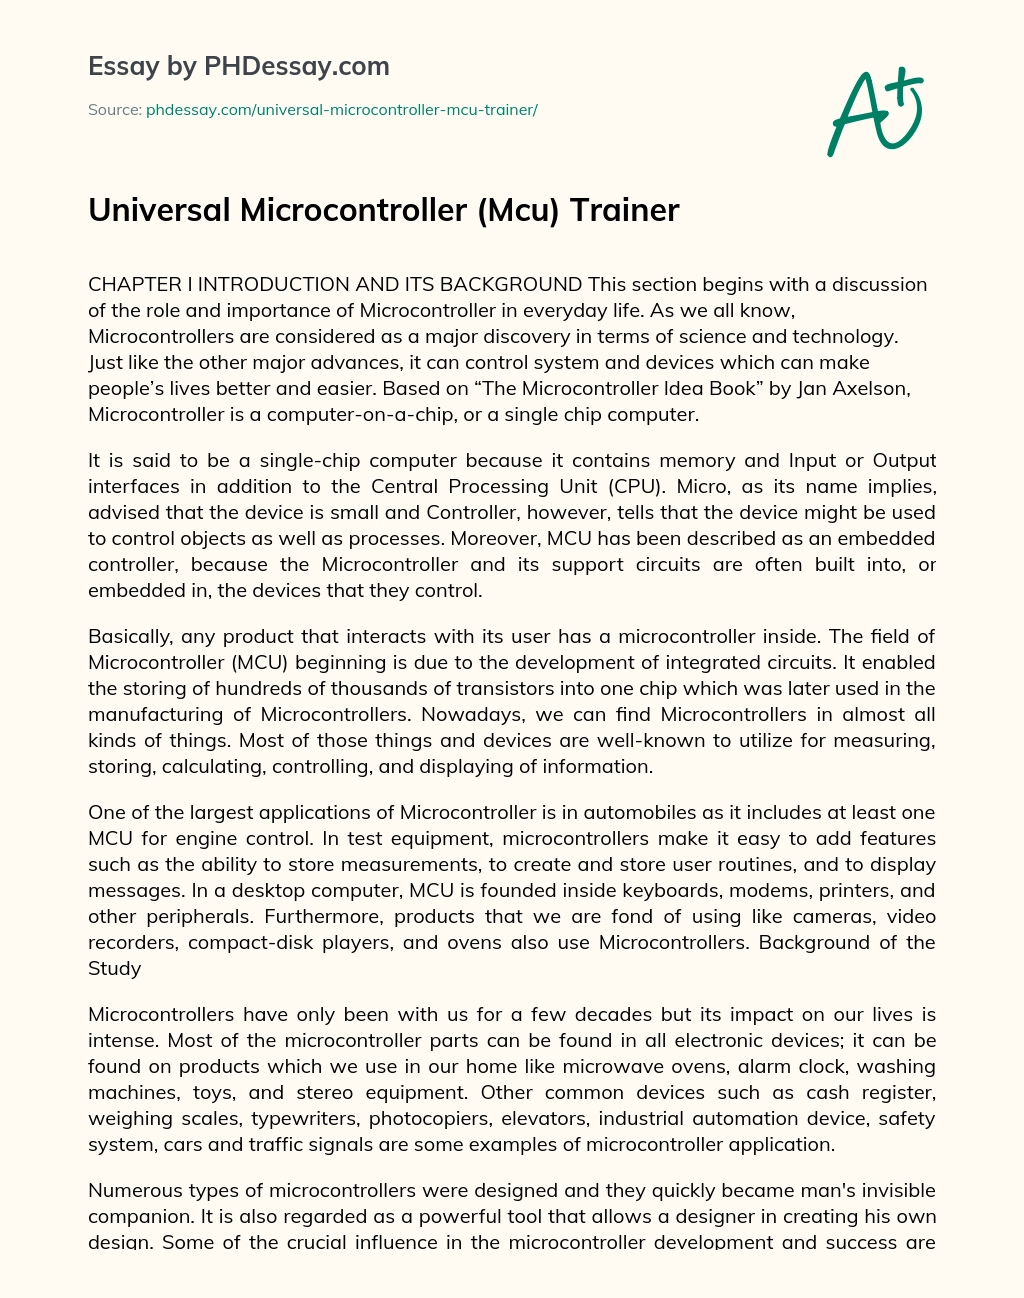 Universal Microcontroller Trainer essay